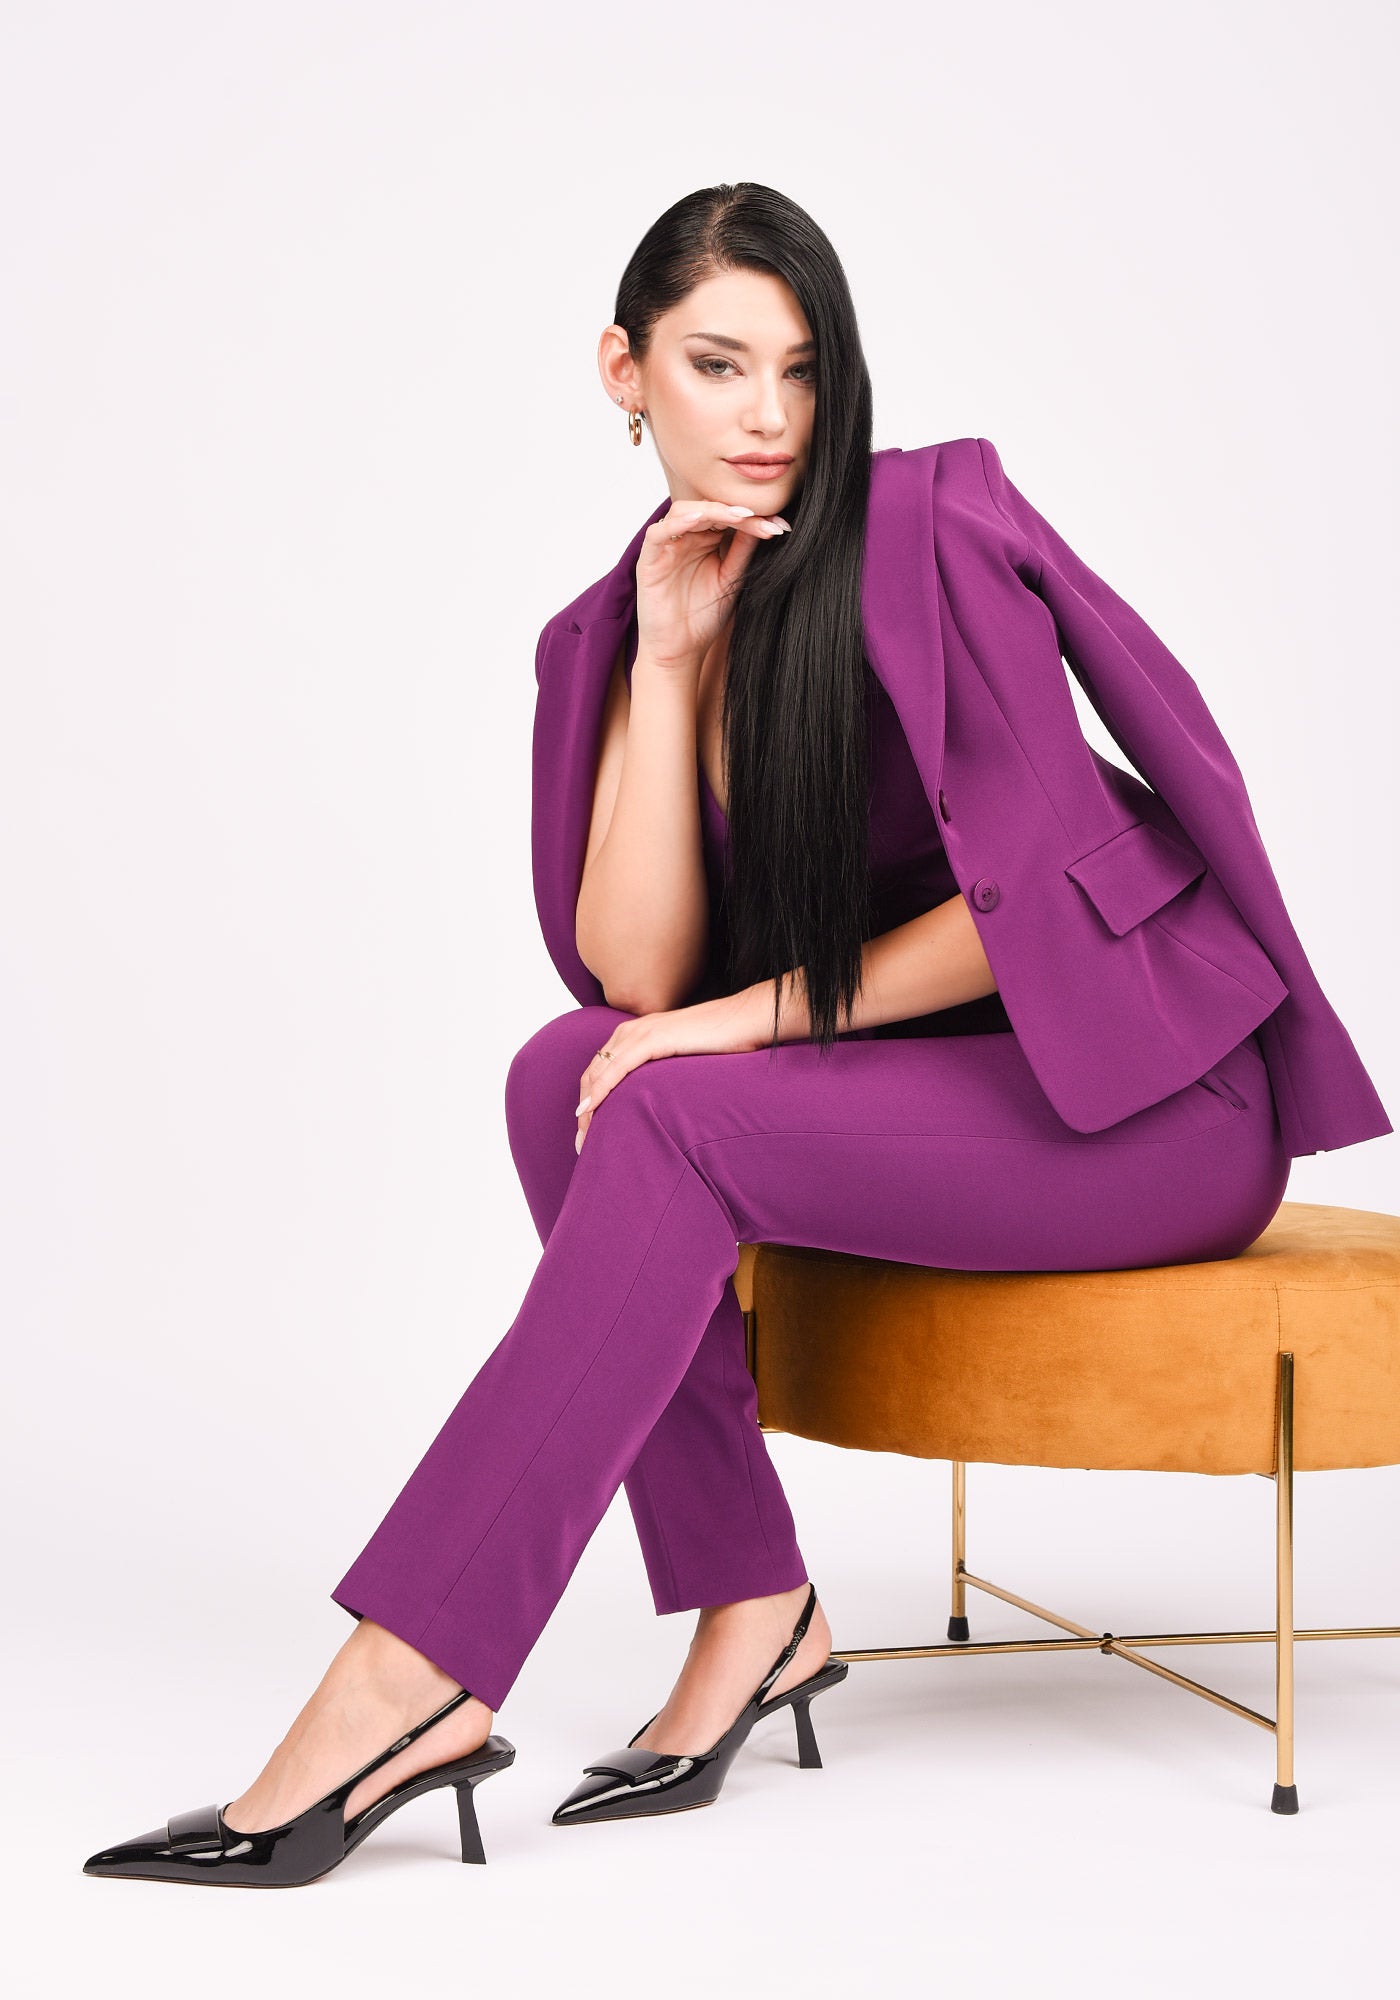 Women's Tailored Single Breasted Blazer in Midnight purple